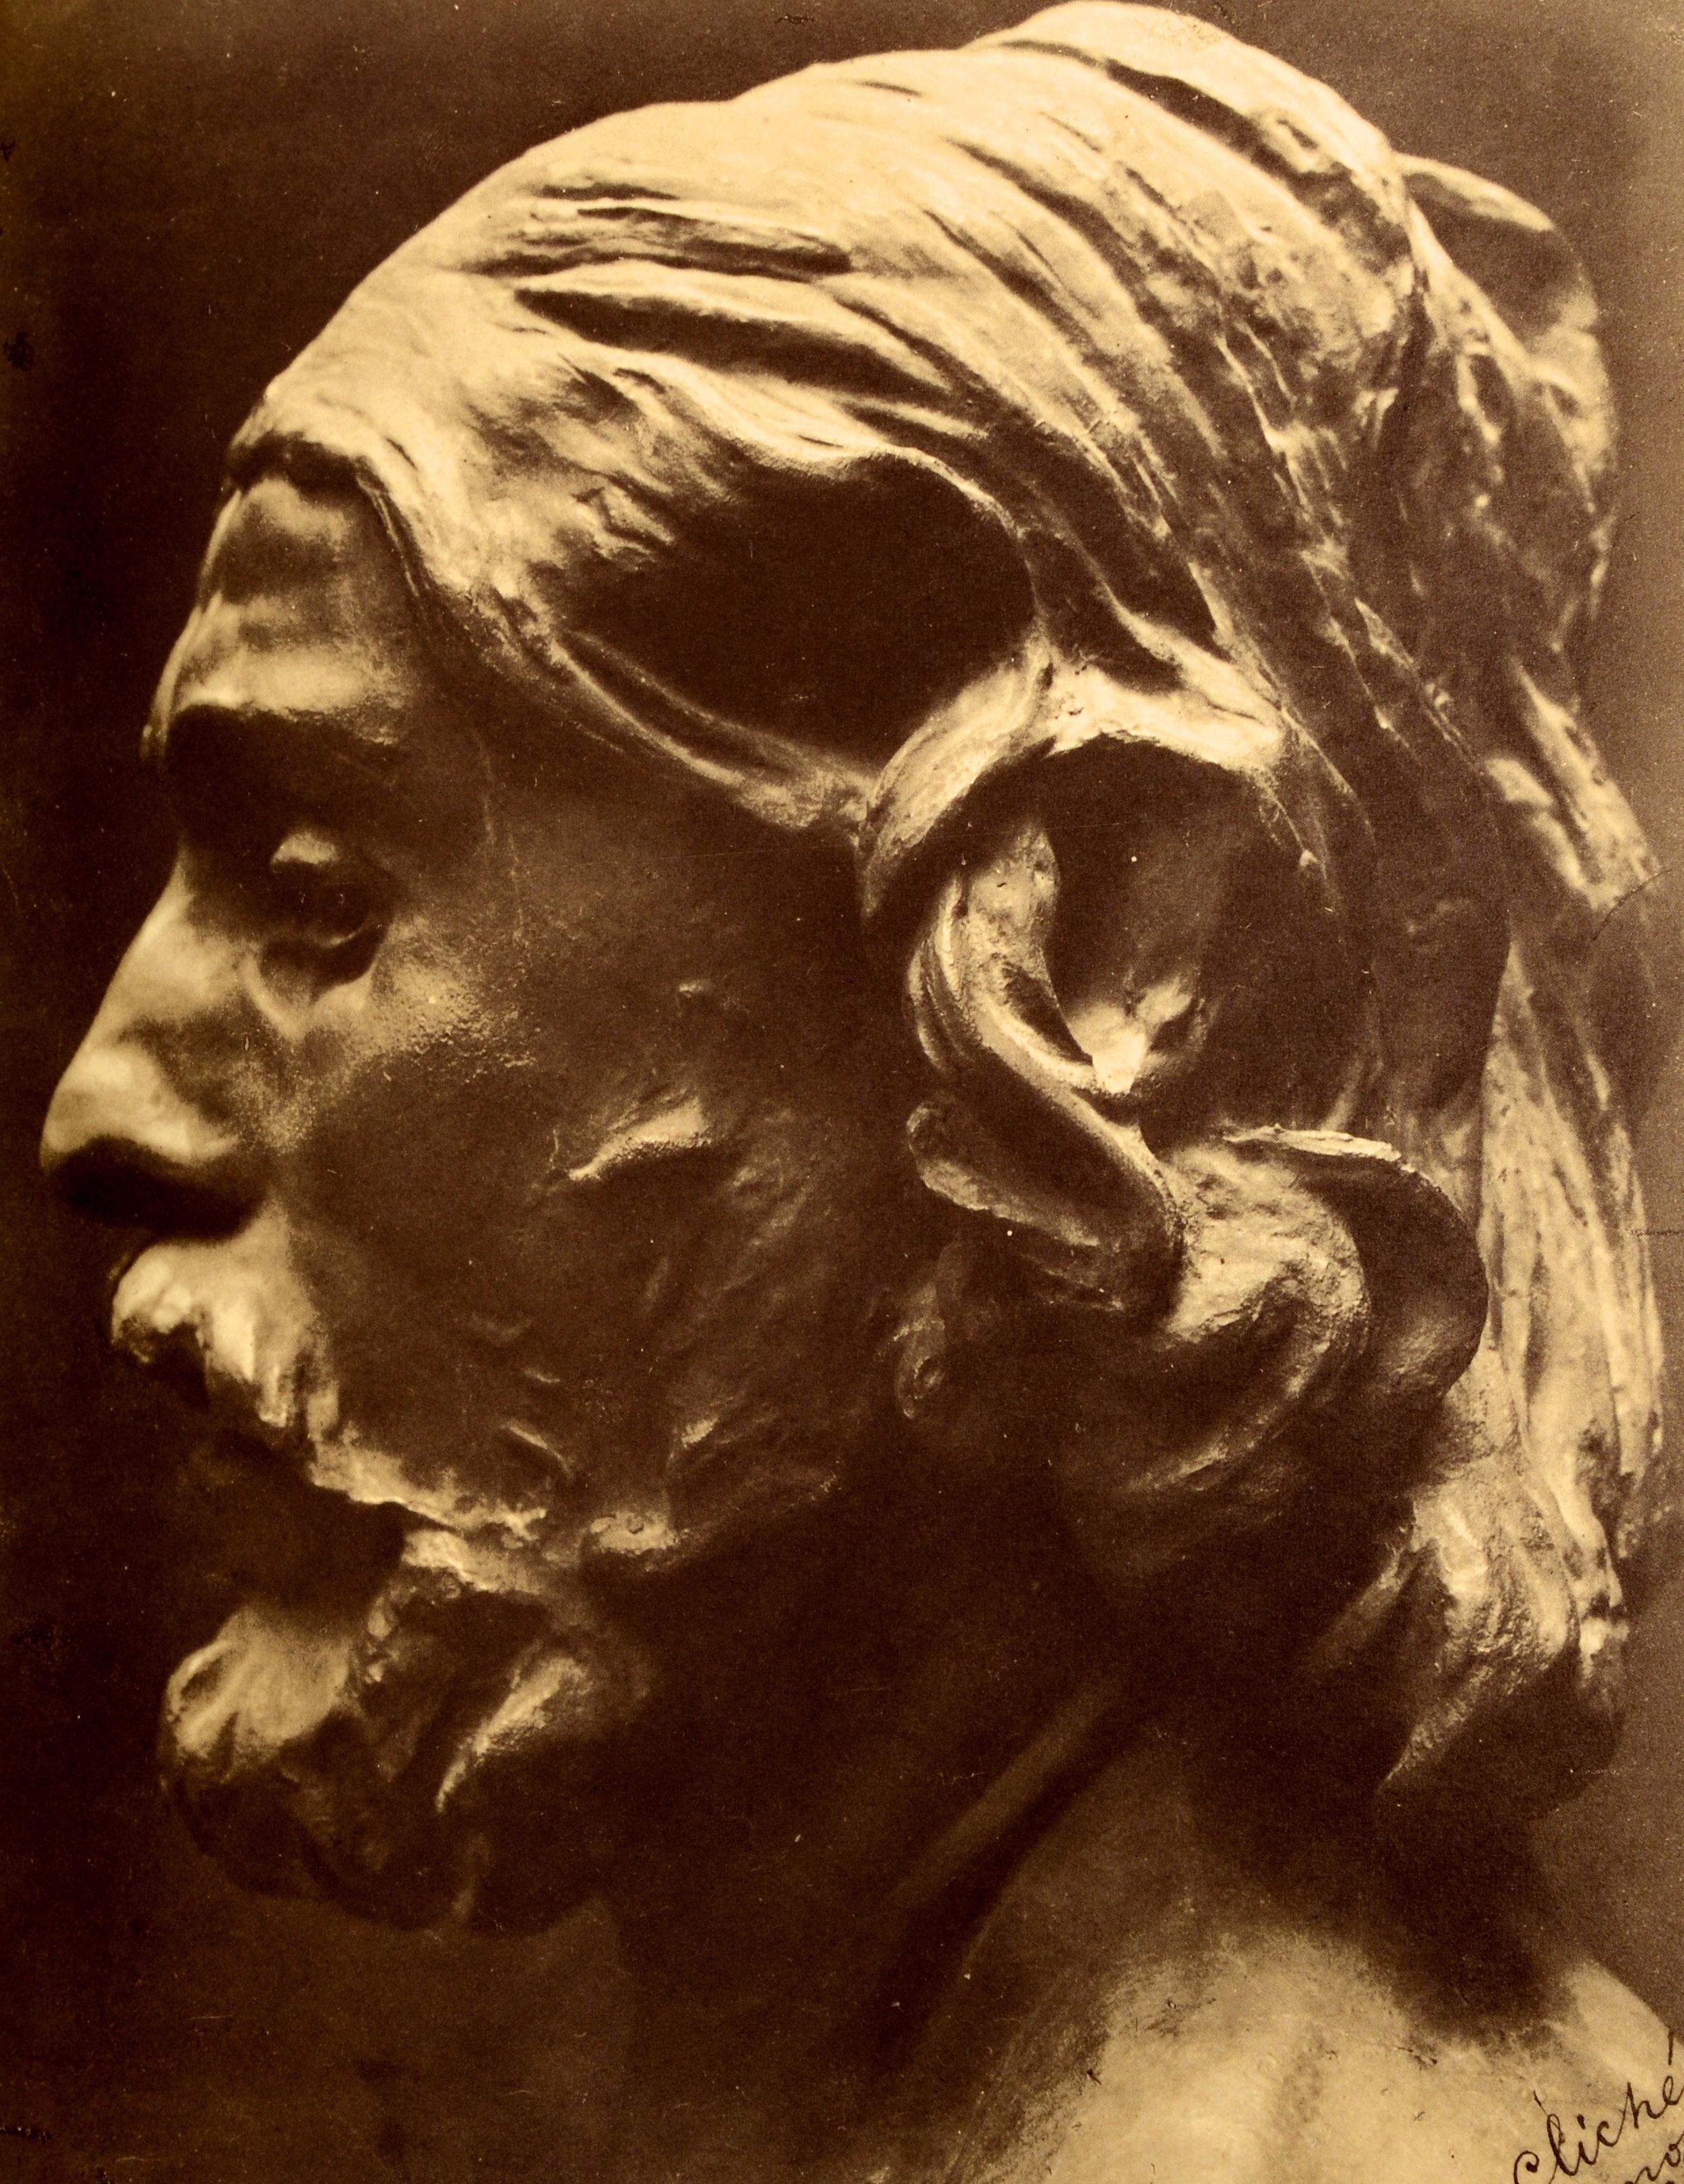 Rodin by Robert Descharnes and Jean-François Chabrun, First Edition 12